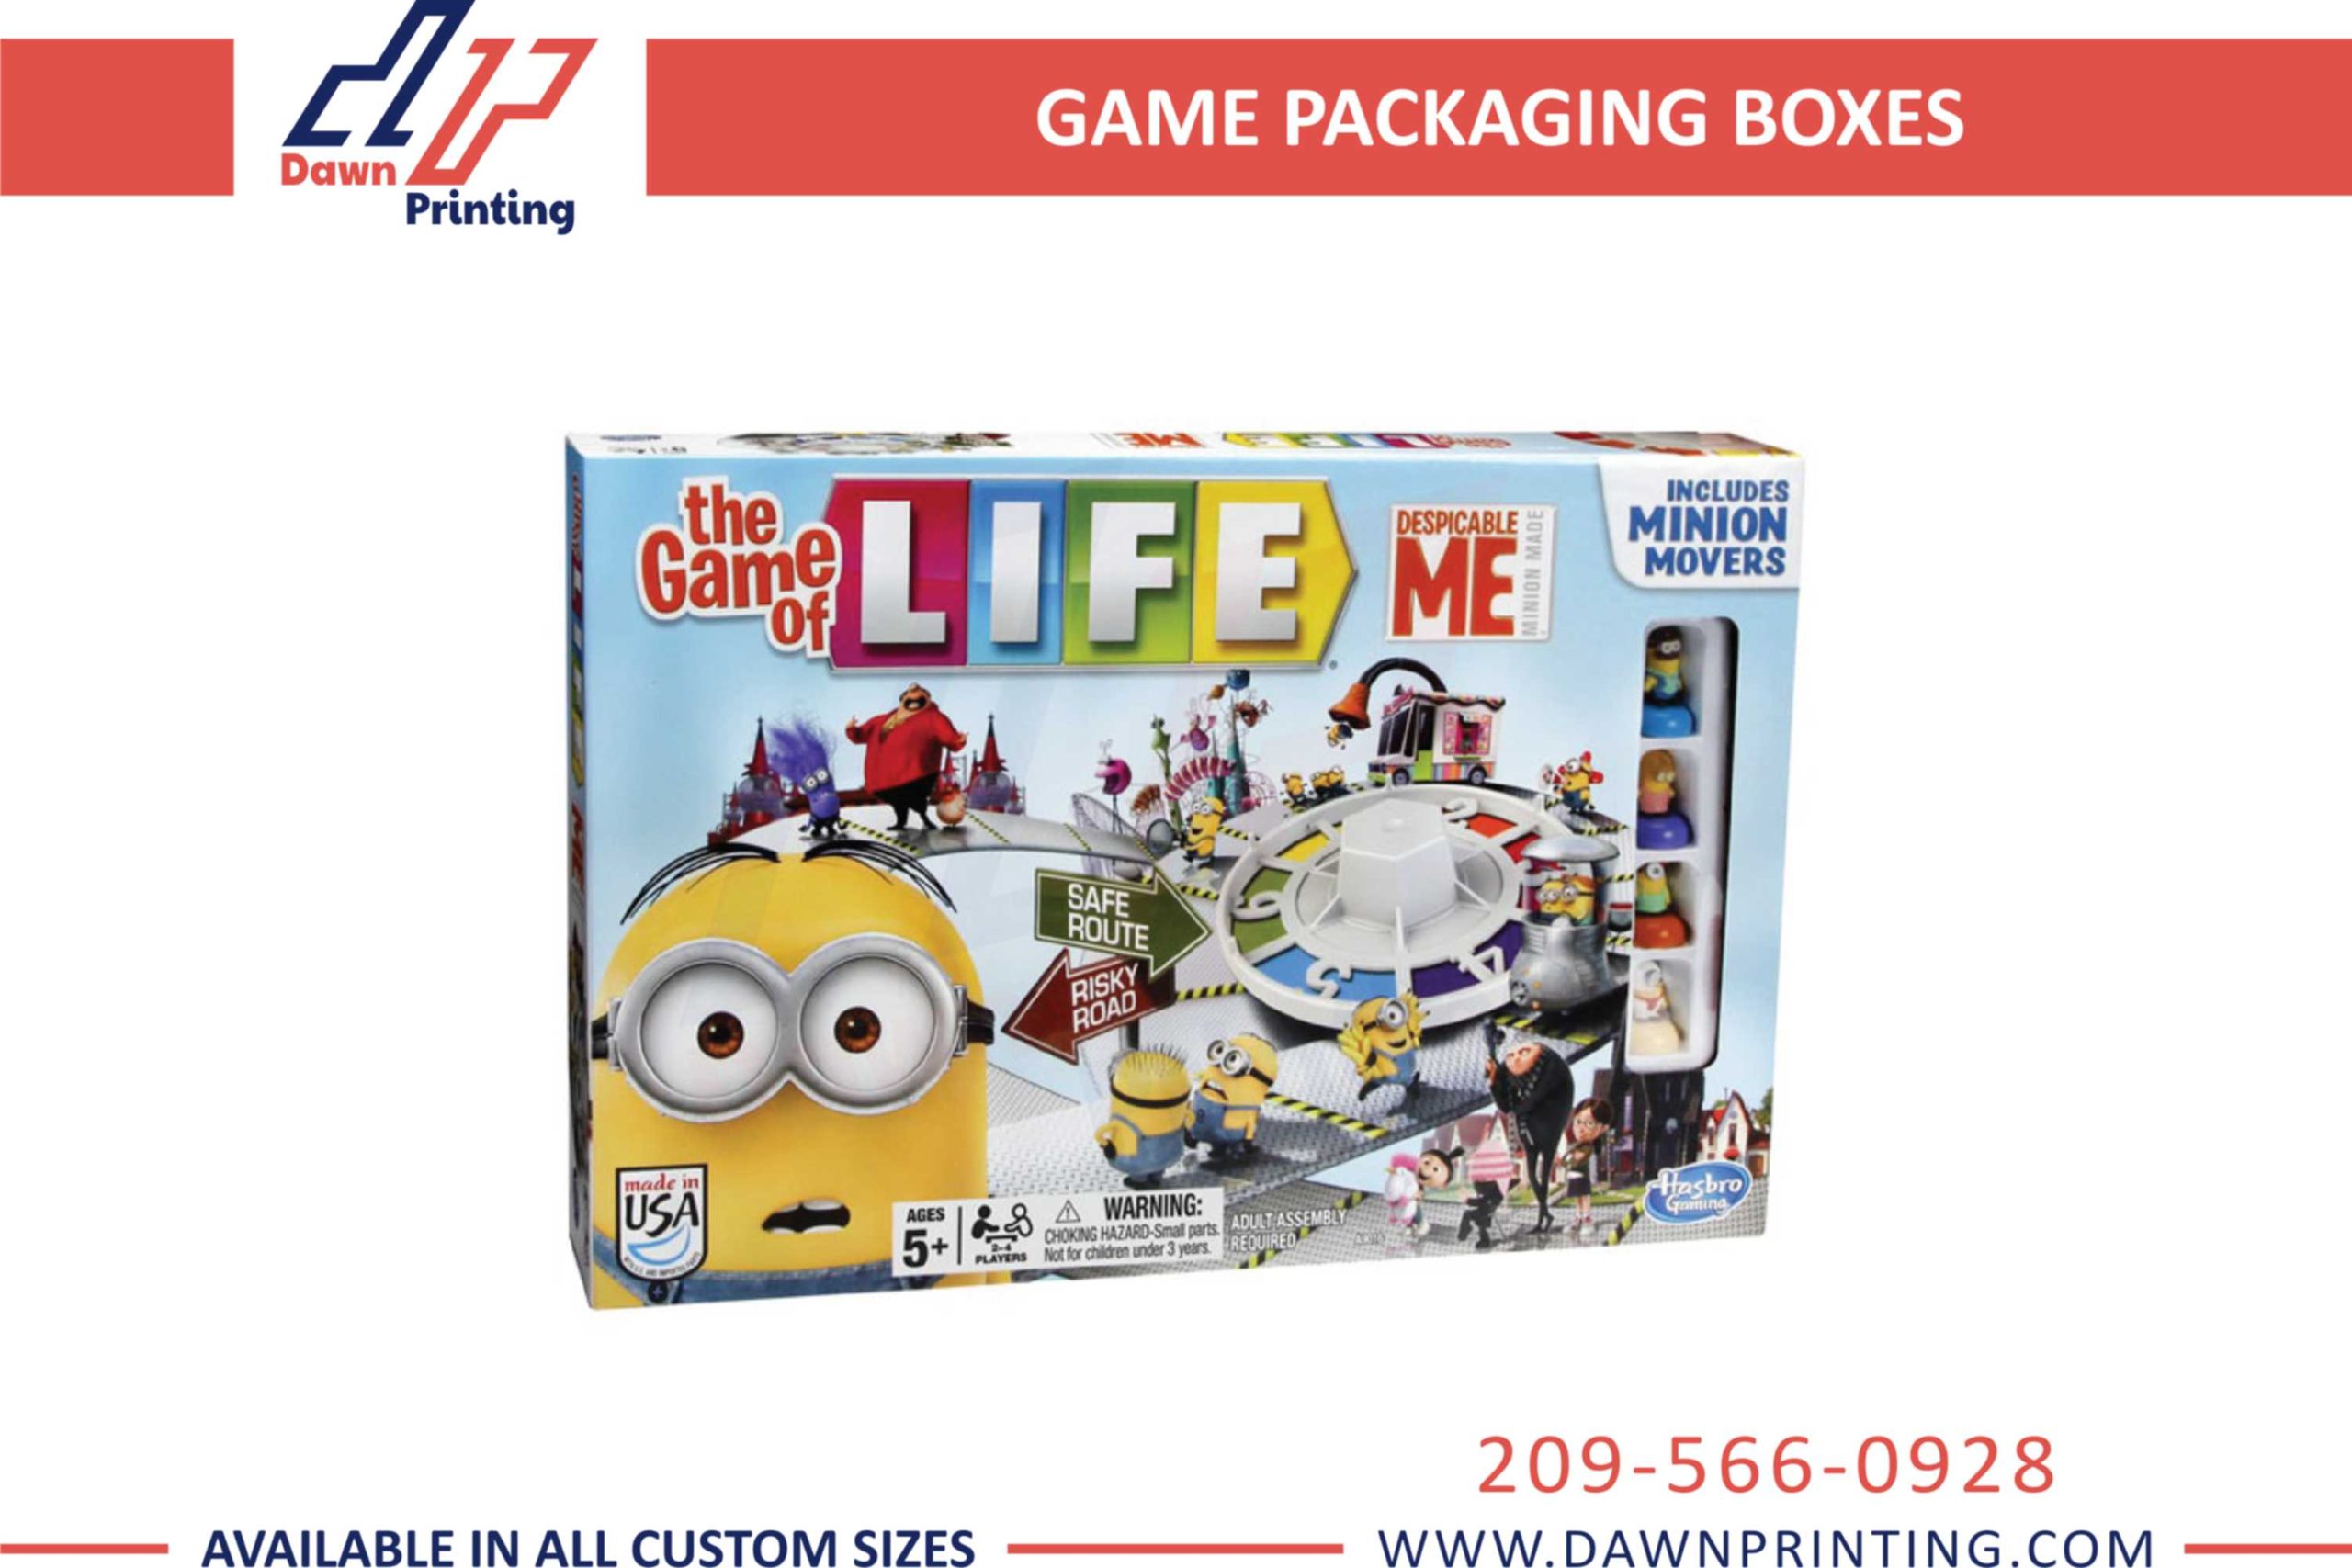 Game Packaging Boxes - Dawn Printing